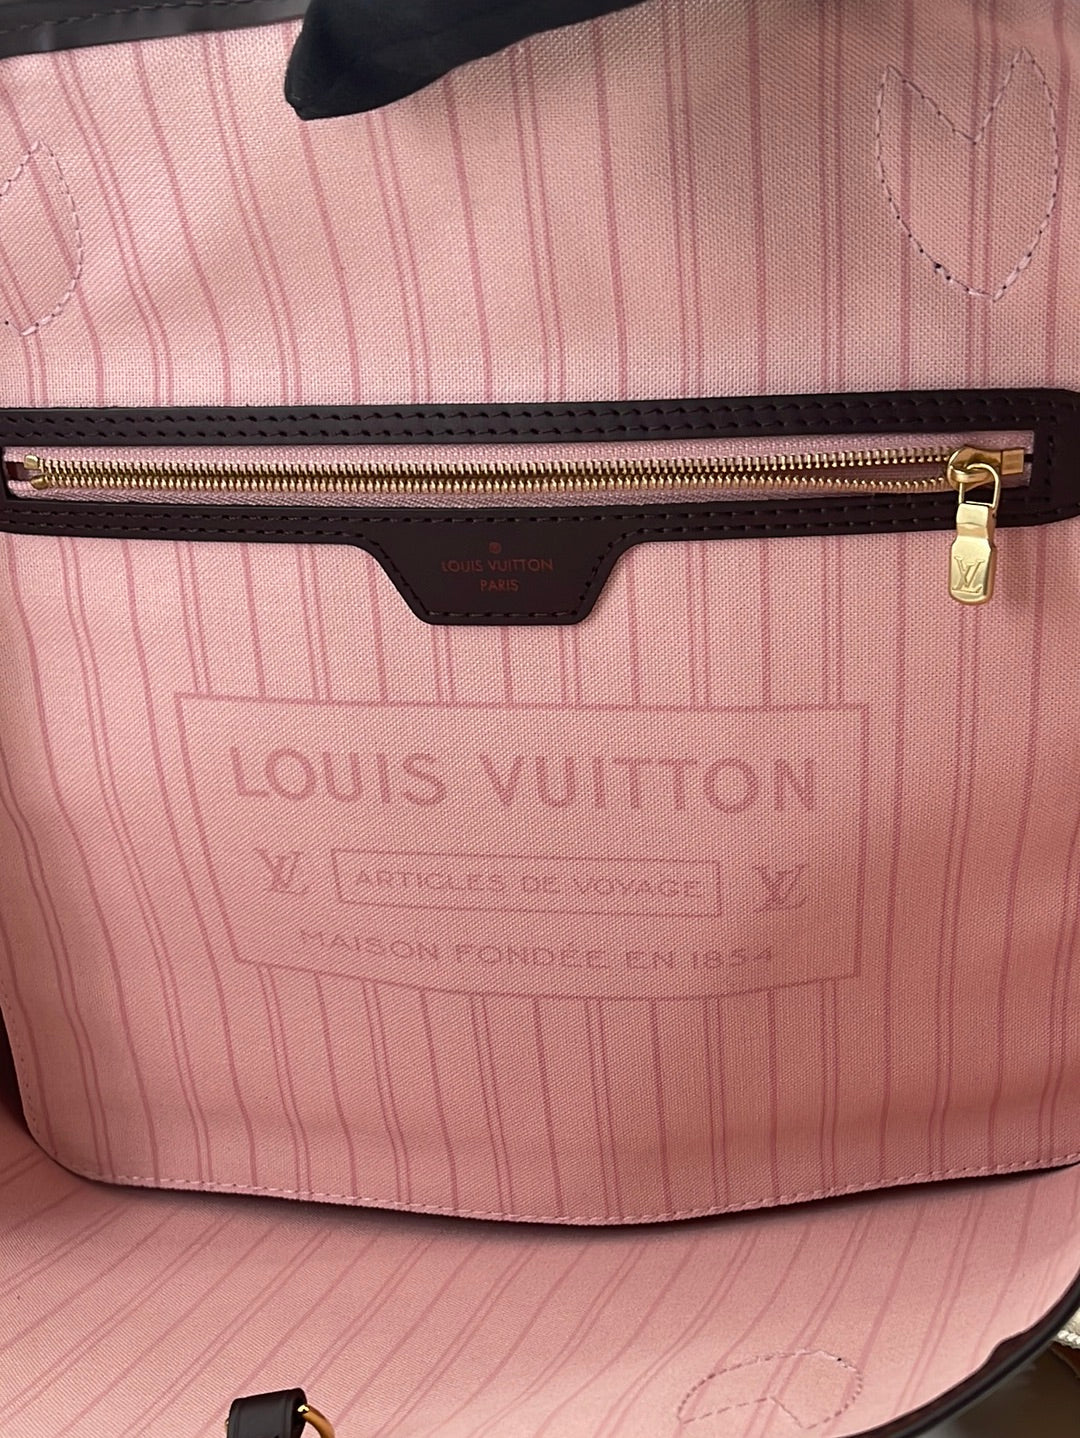 Louis Vuitton Neverfull MM Damier Ebene Cherry Interior (RRP £1,410)